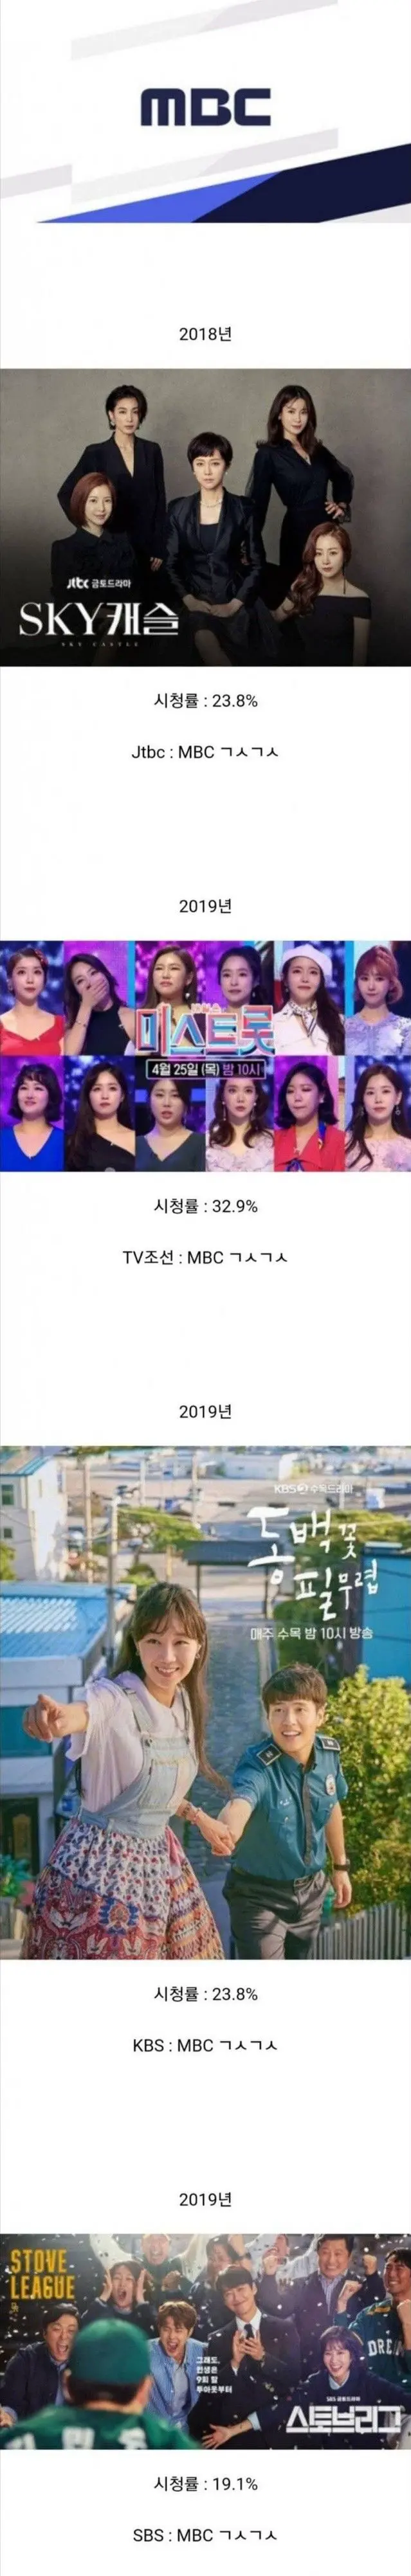 MBC가 거절했던 드라마 목록 | mbong.kr 엠봉